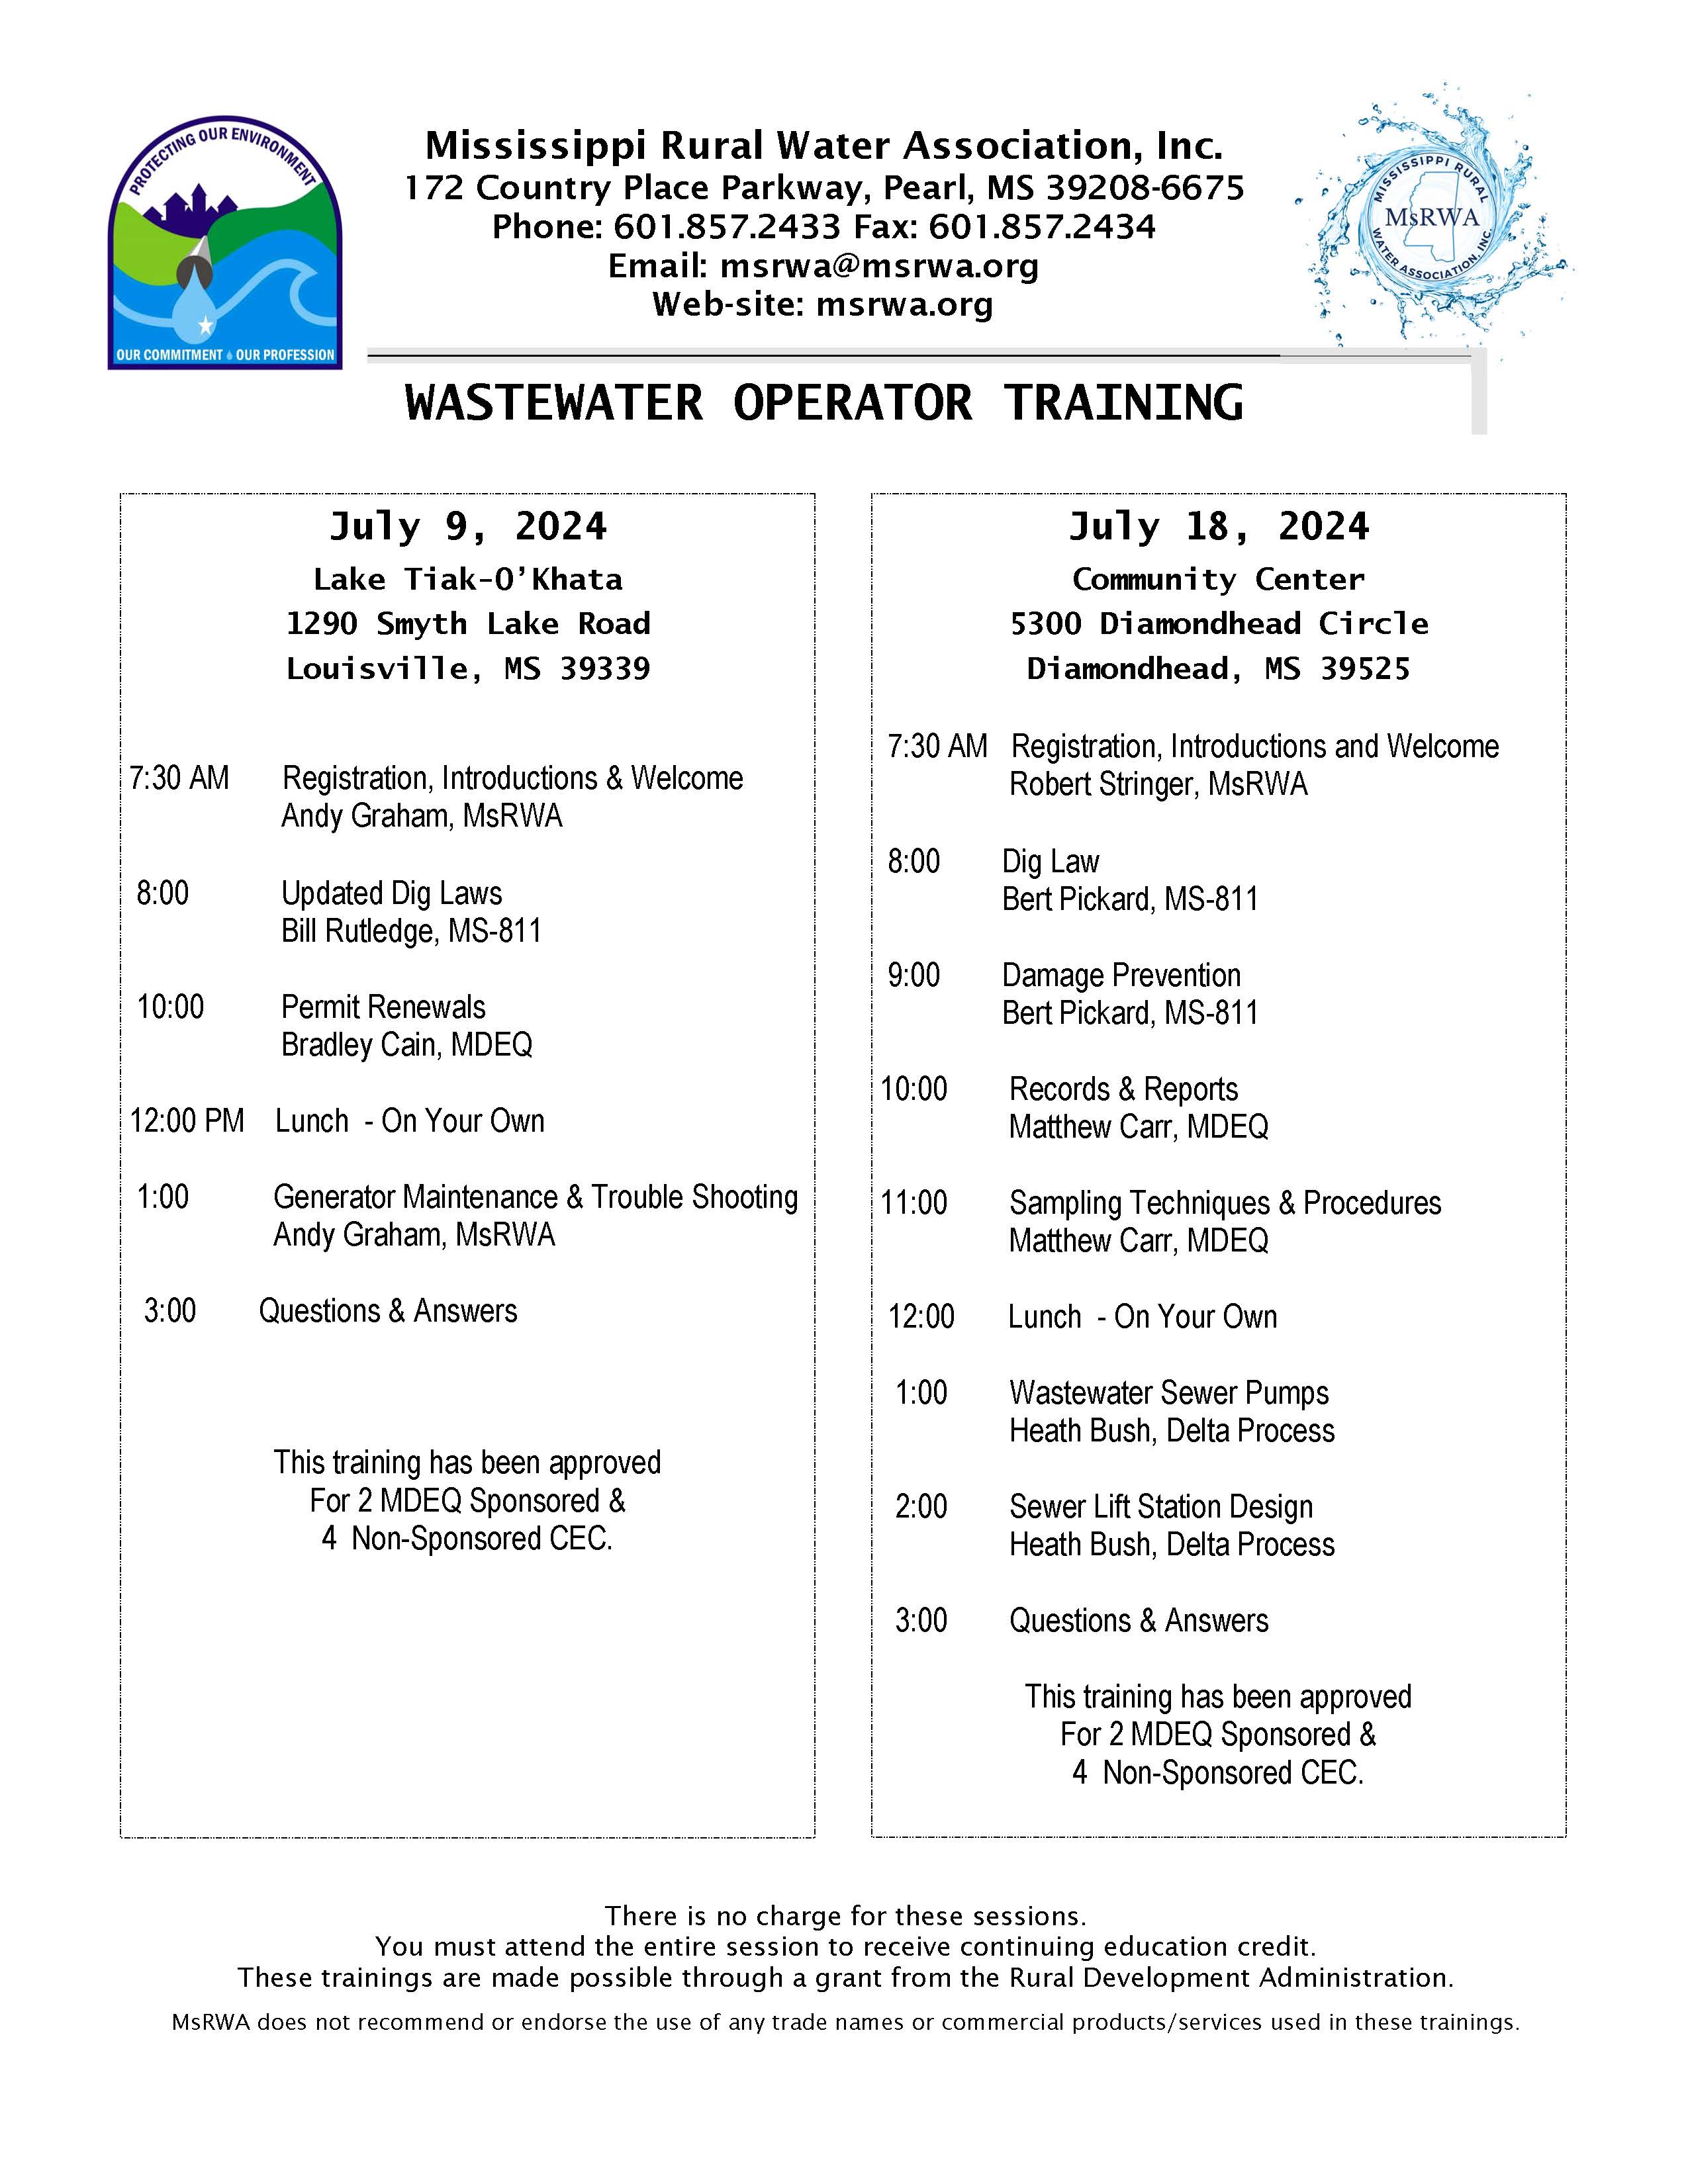 Wastewater Operator Training - 2S/2NS - Diamondhead @ Community Center